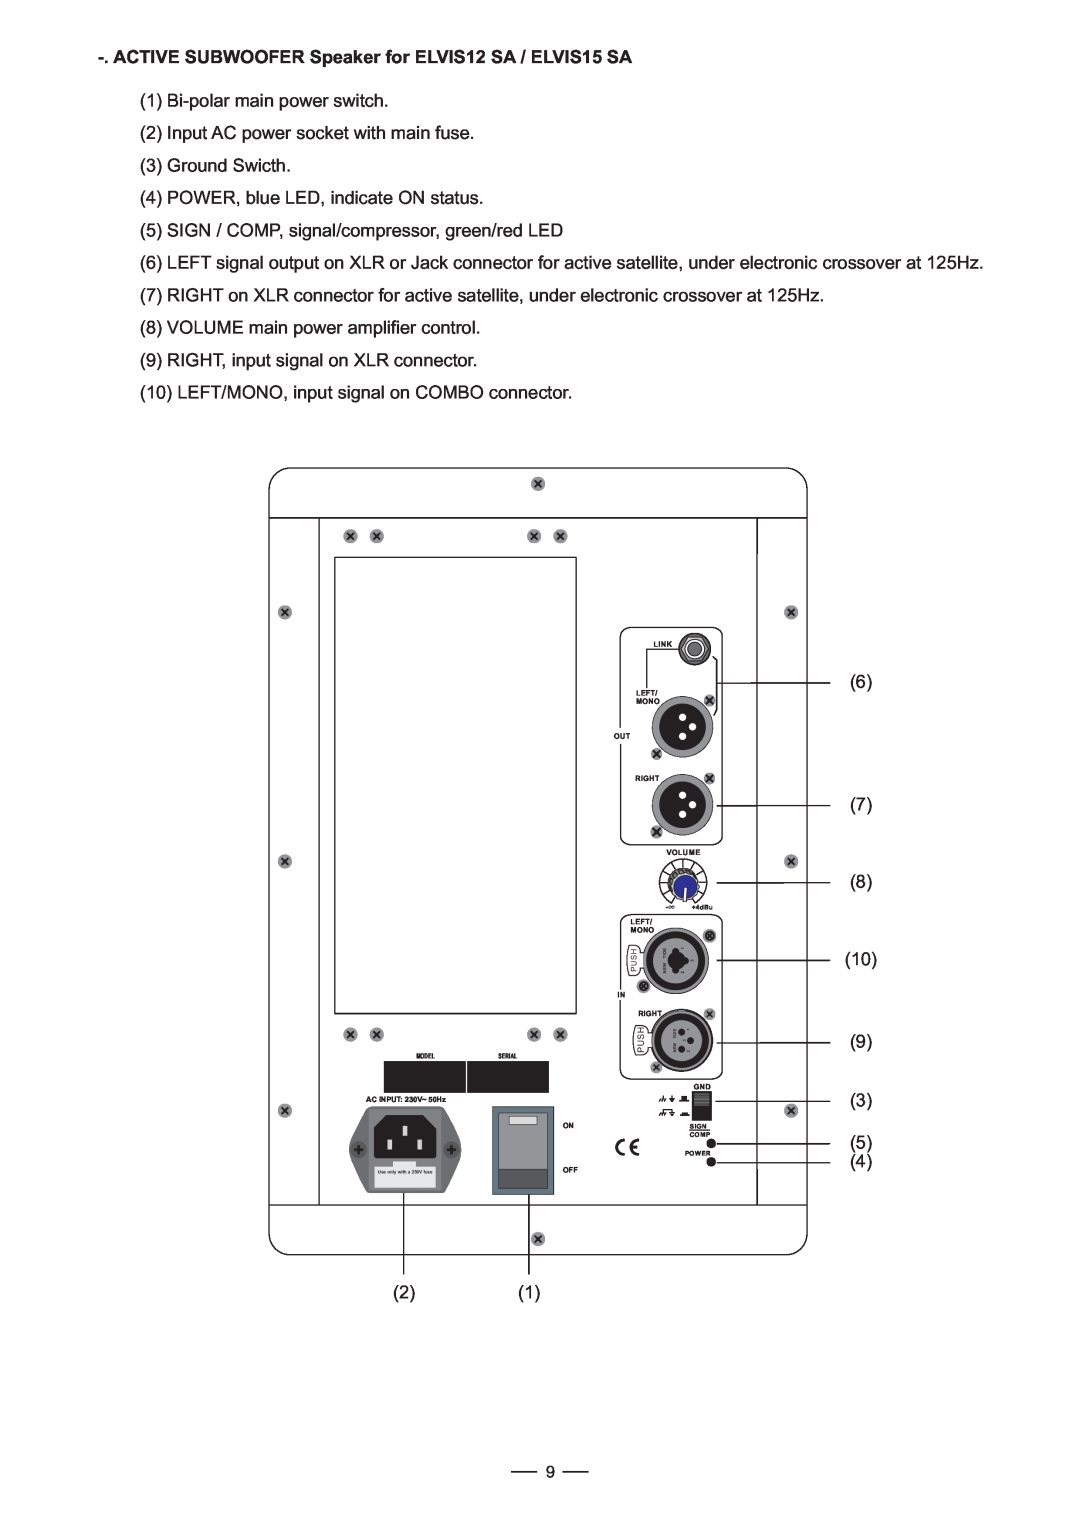 Nilfisk-ALTO Elvis Series user manual 1Bi-polarmain power switch 